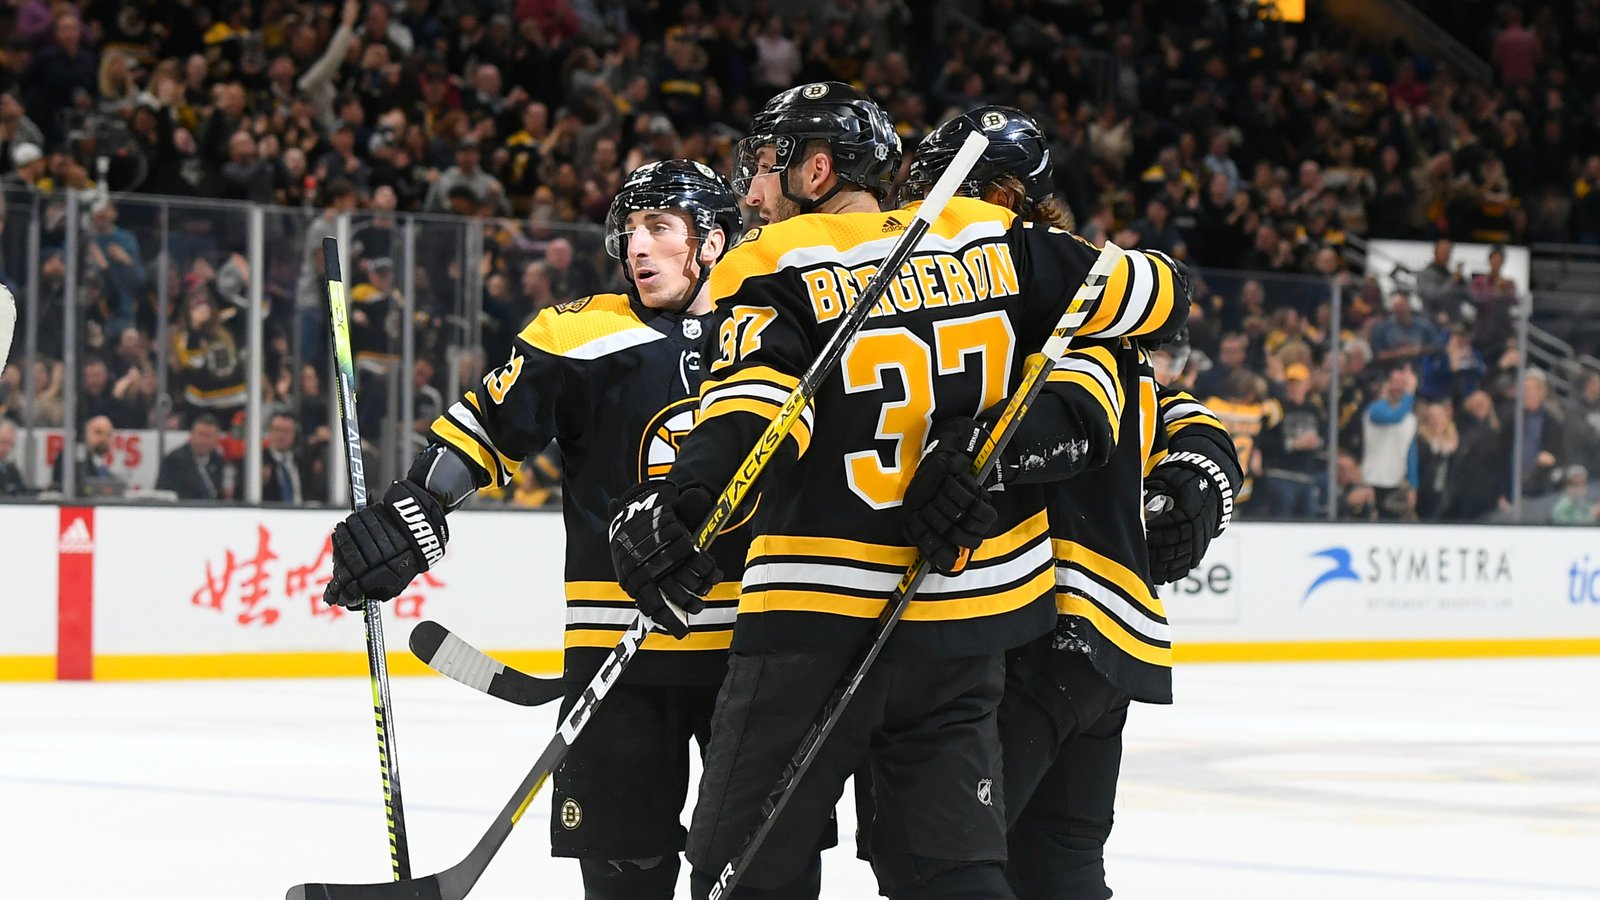 Bruins look to continue winning streak against the struggling Sens